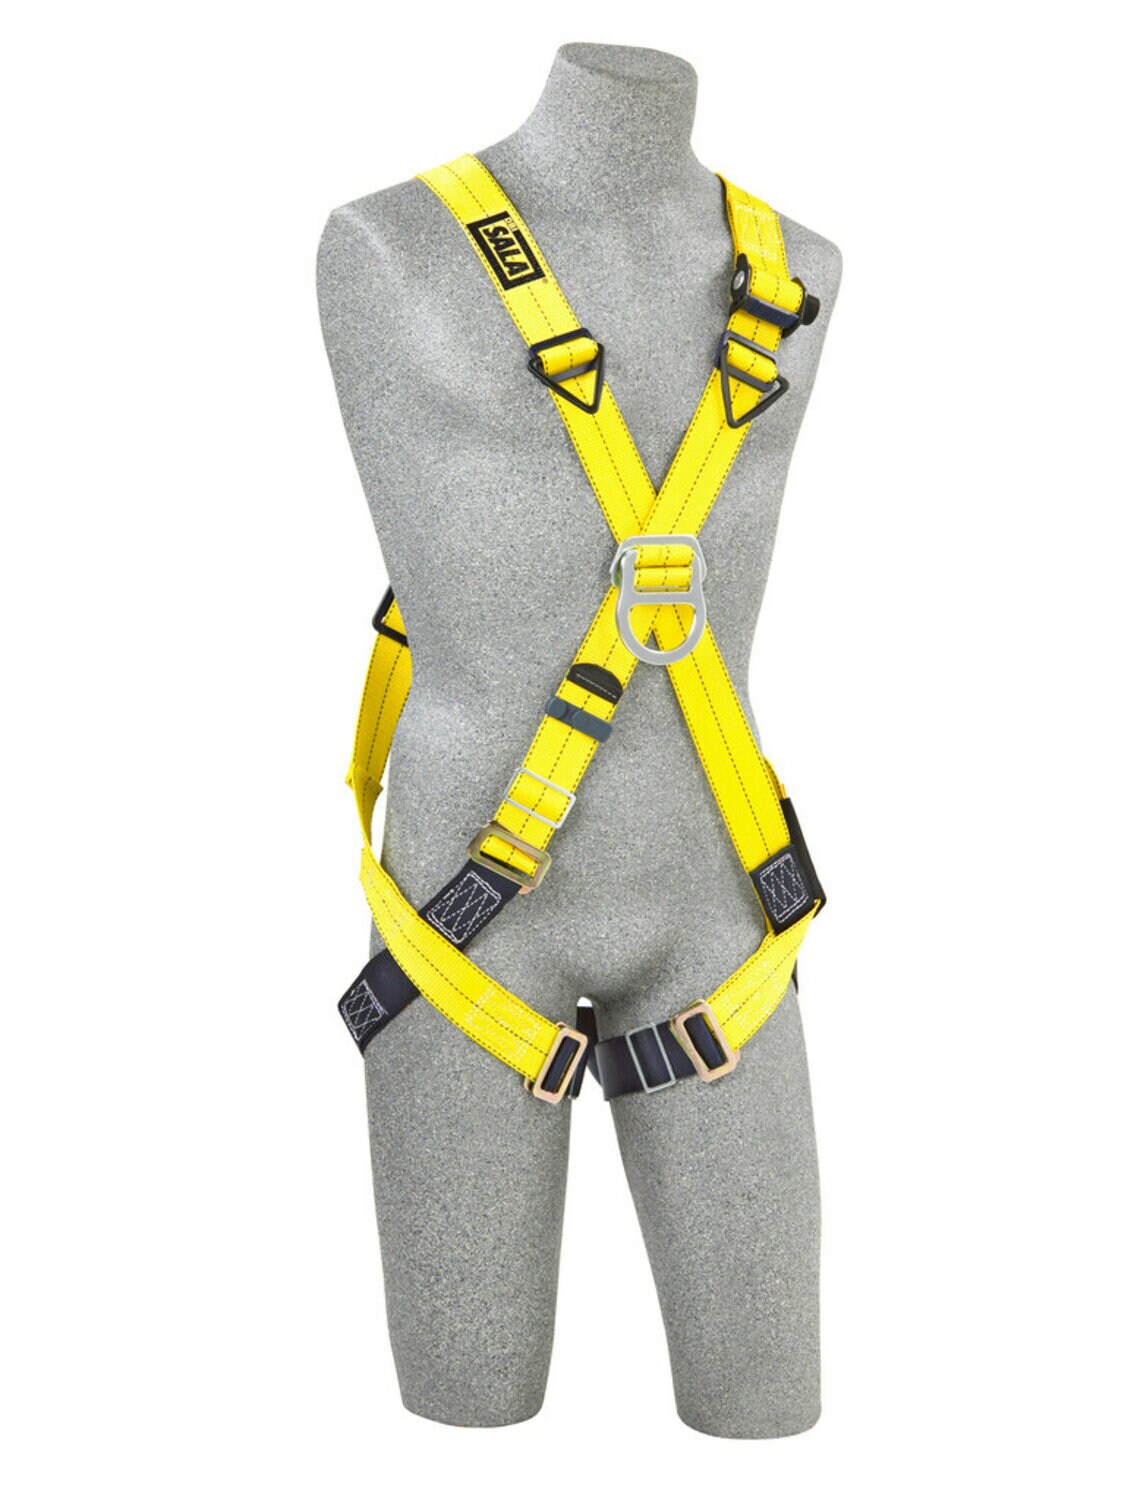 7012815304 - 3M DBI-SALA Delta Cross-Over Climbing Safety Harness 1101857, 3X